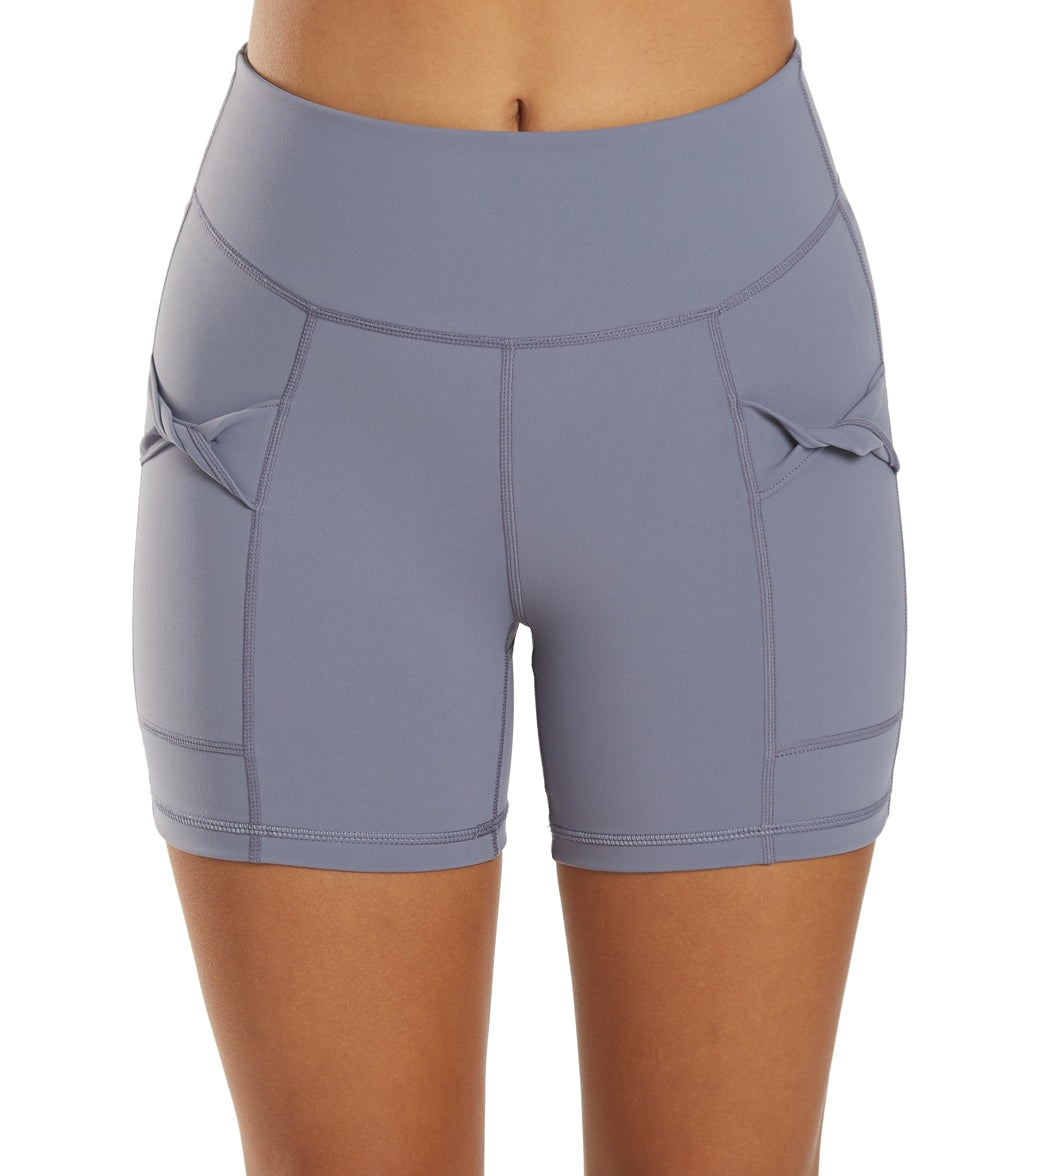 Women's Gym Shorts, Yoga Shorts with Pockets